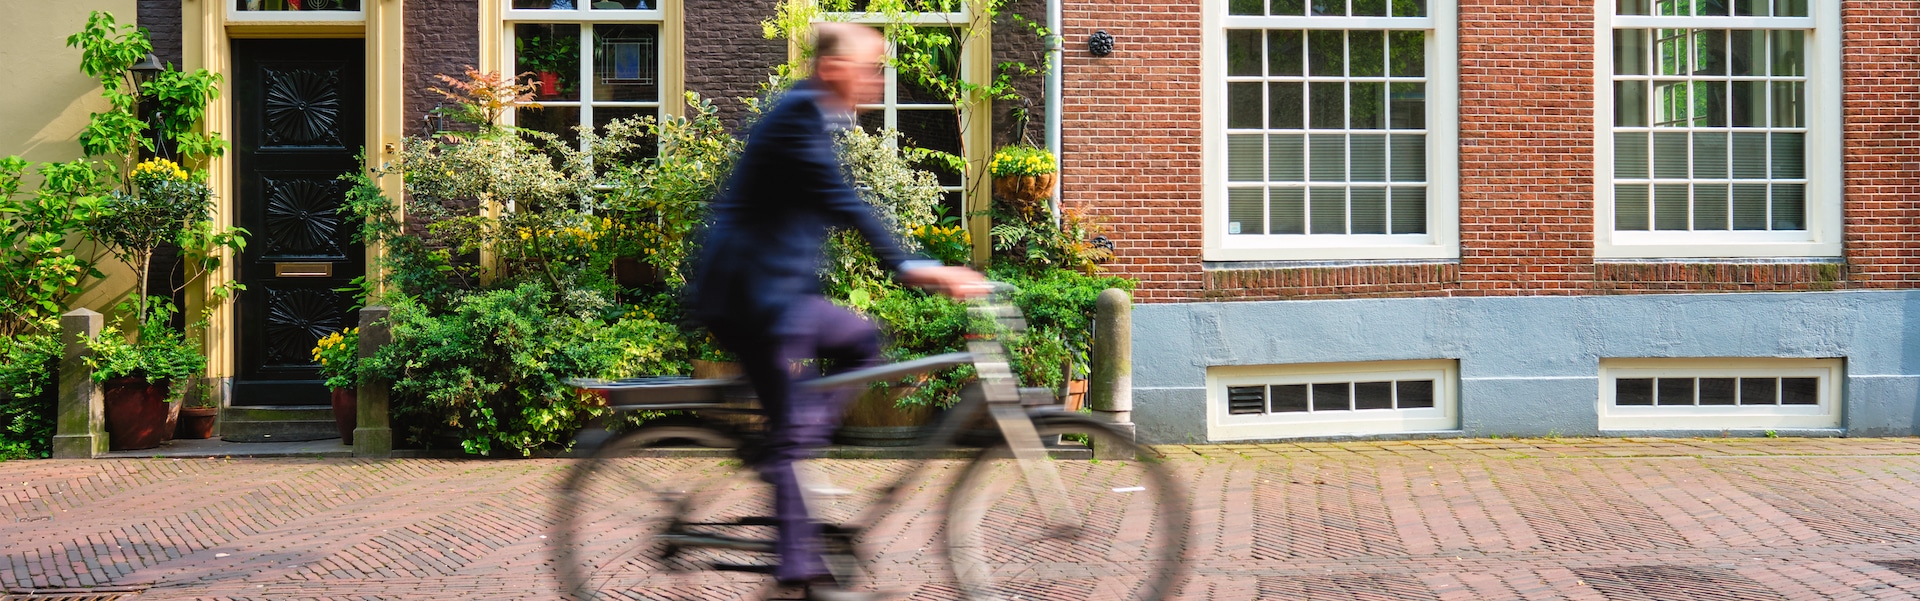 Amsterdam Bike City | Amsterdam Economic Board